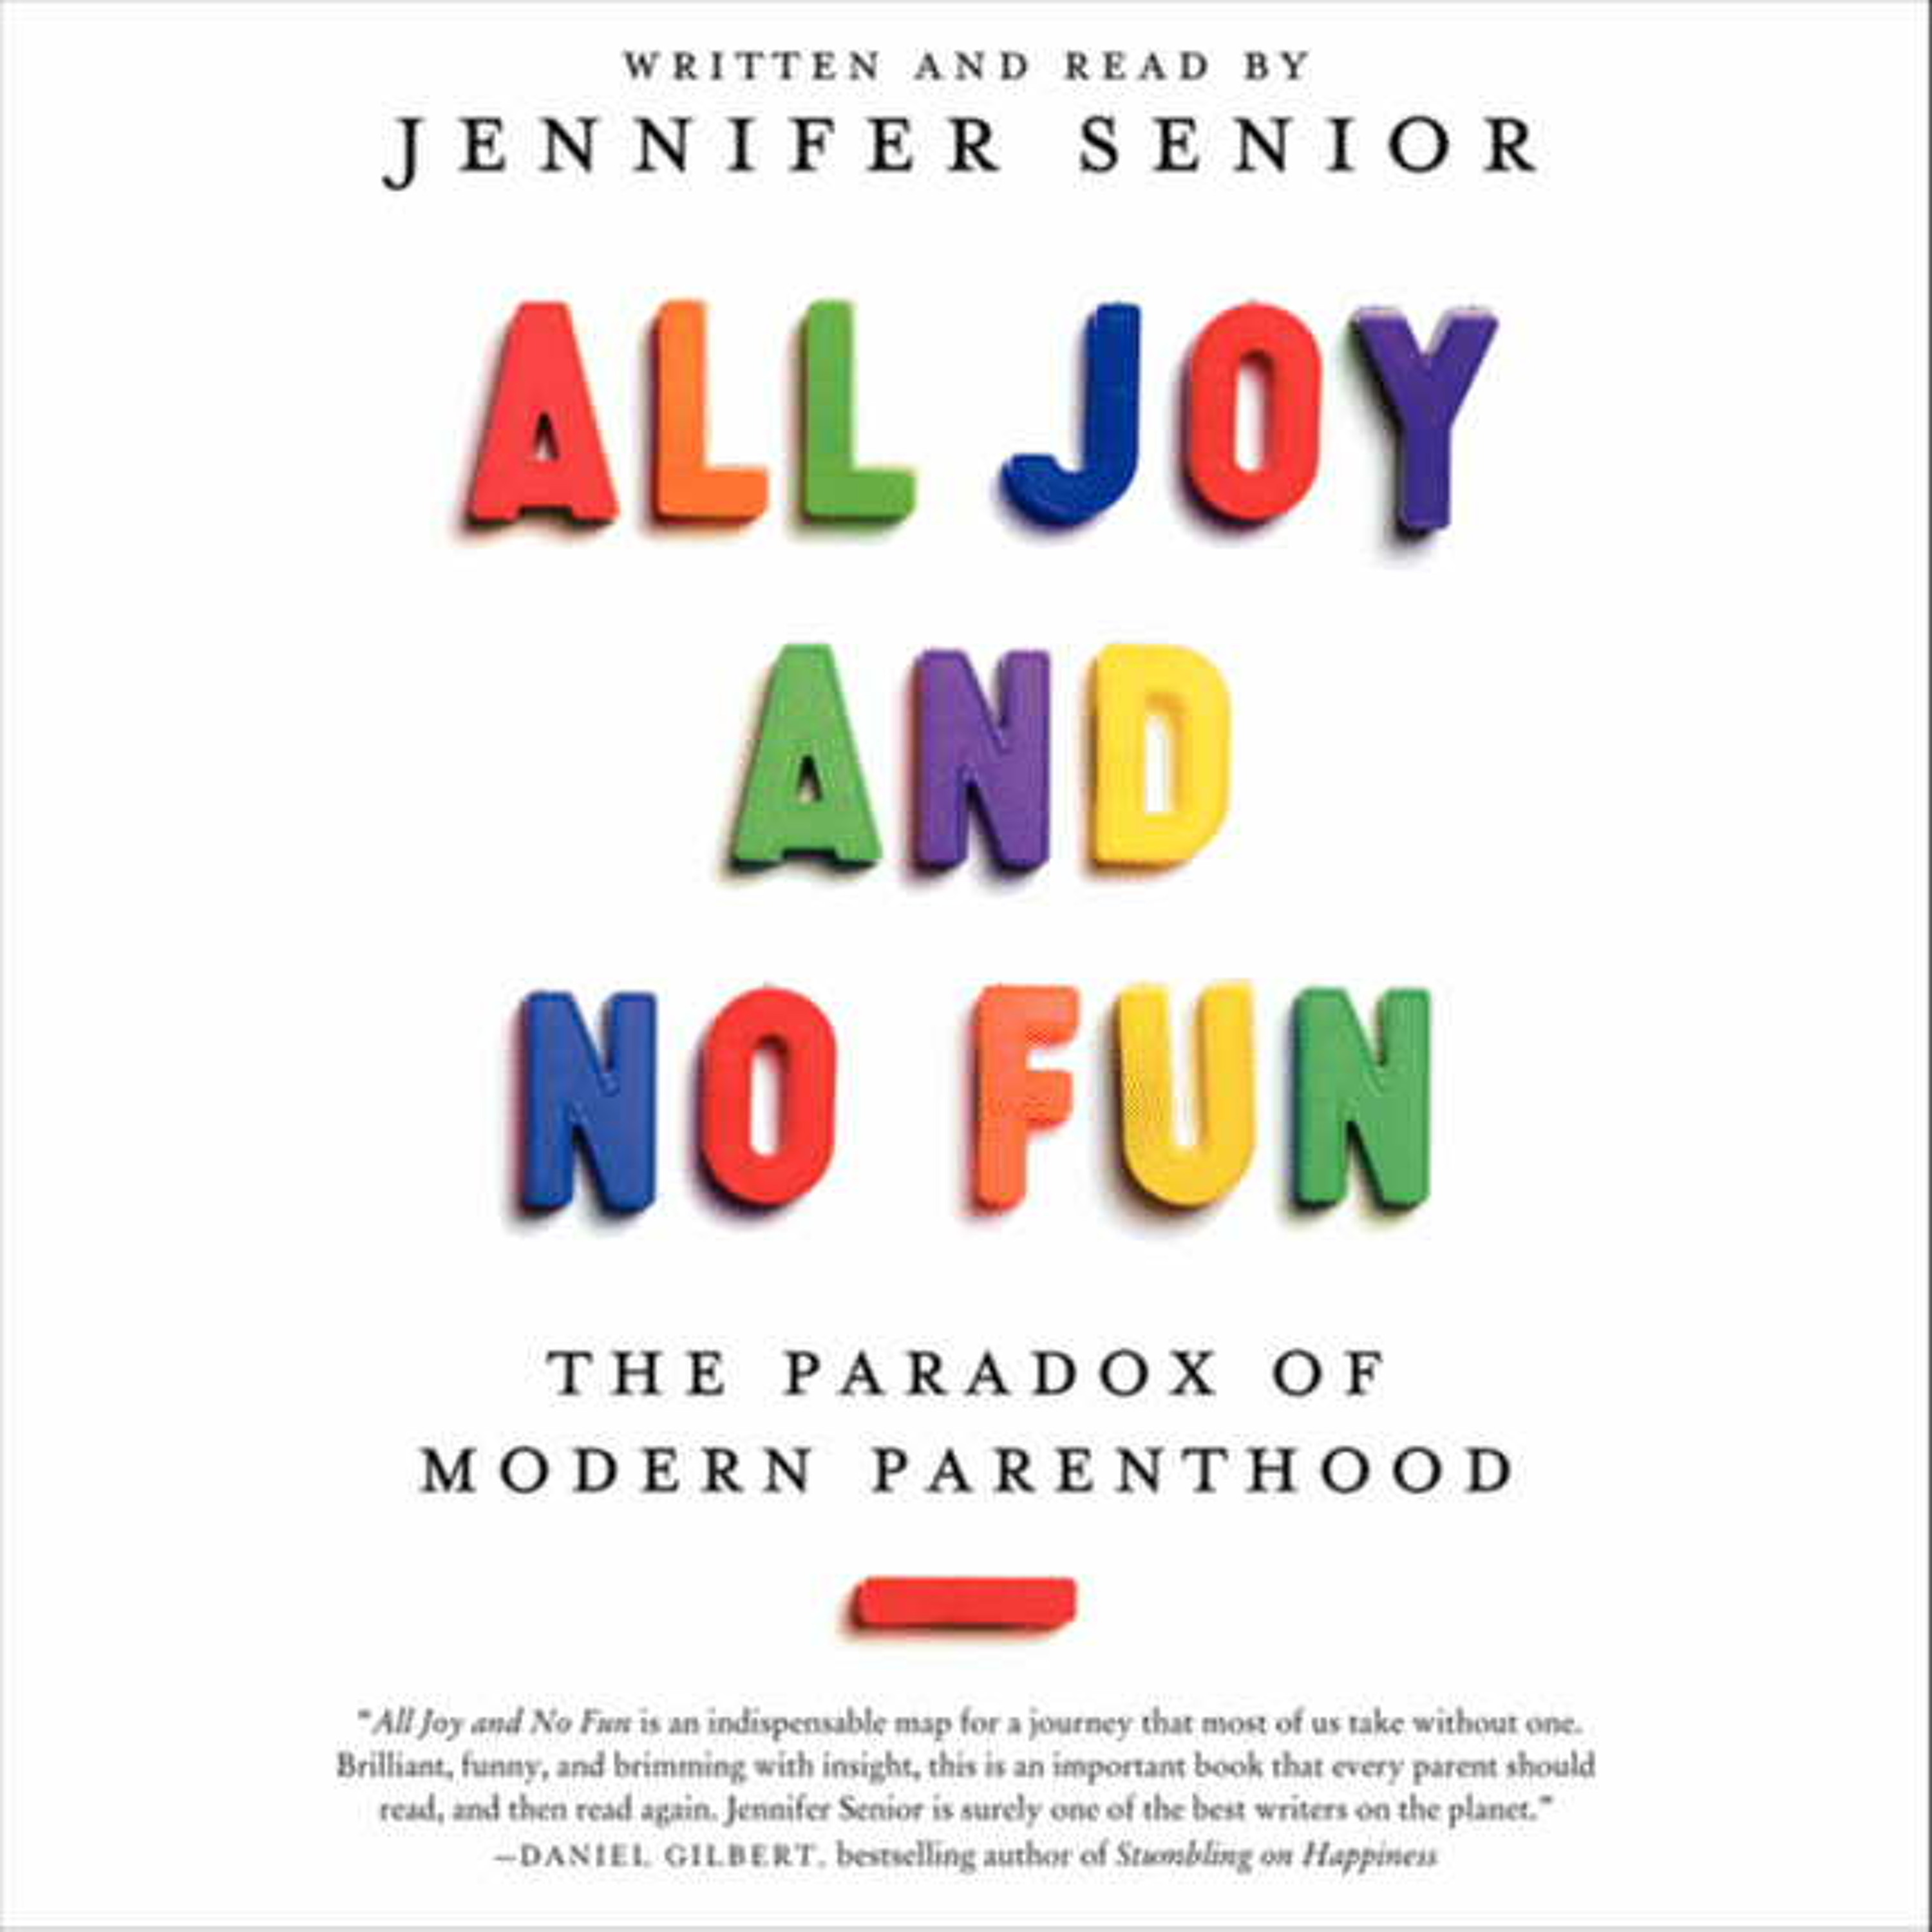 All Joy and No Fun by Jennifer Senior